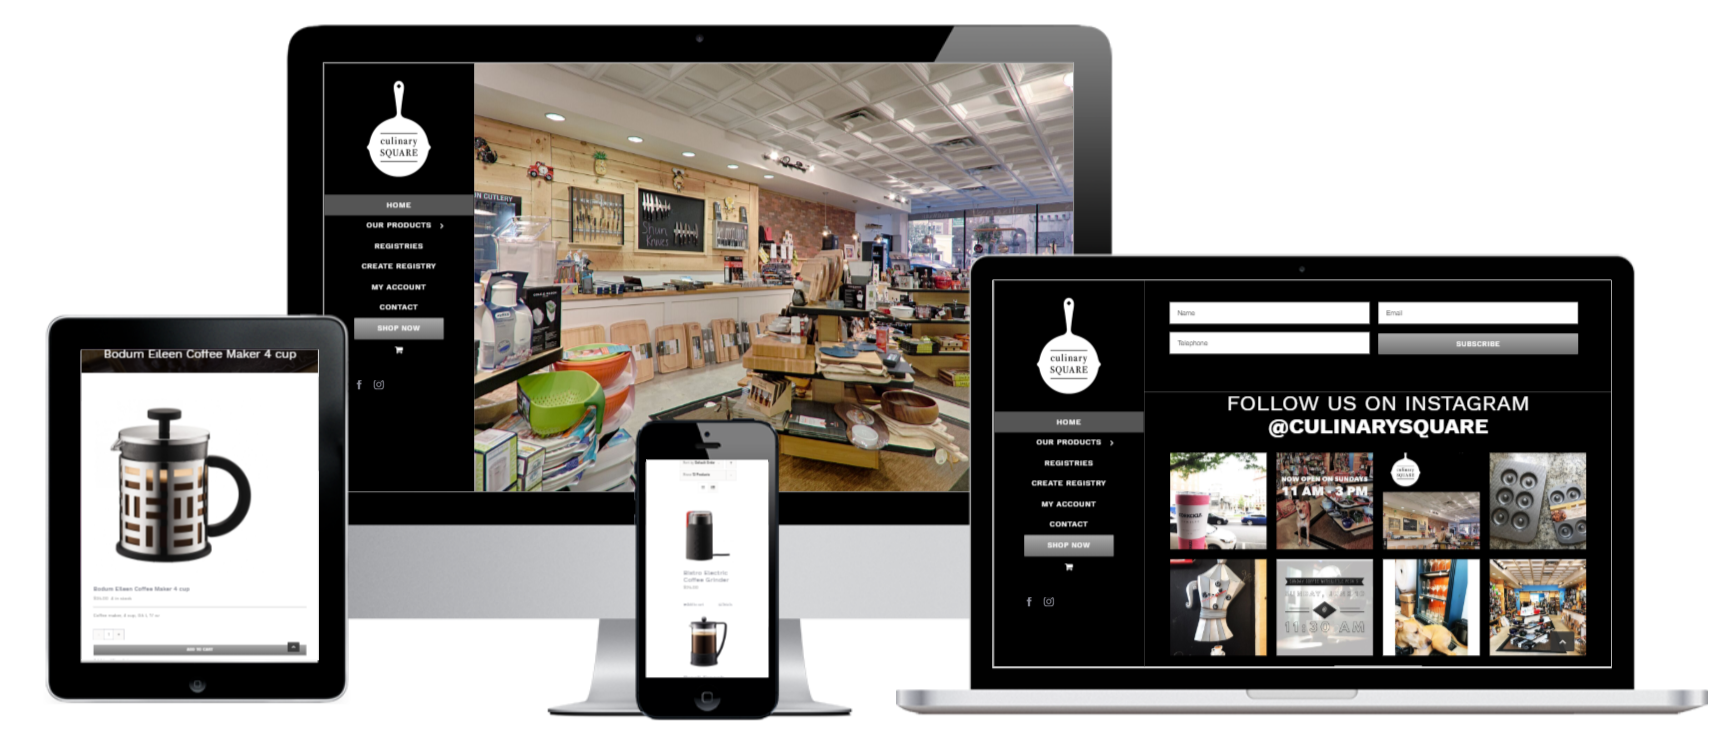 RadioRadiox Online Store Website Design - Capital ePay WooCommerce Credit Card Payment Gateway Plugin